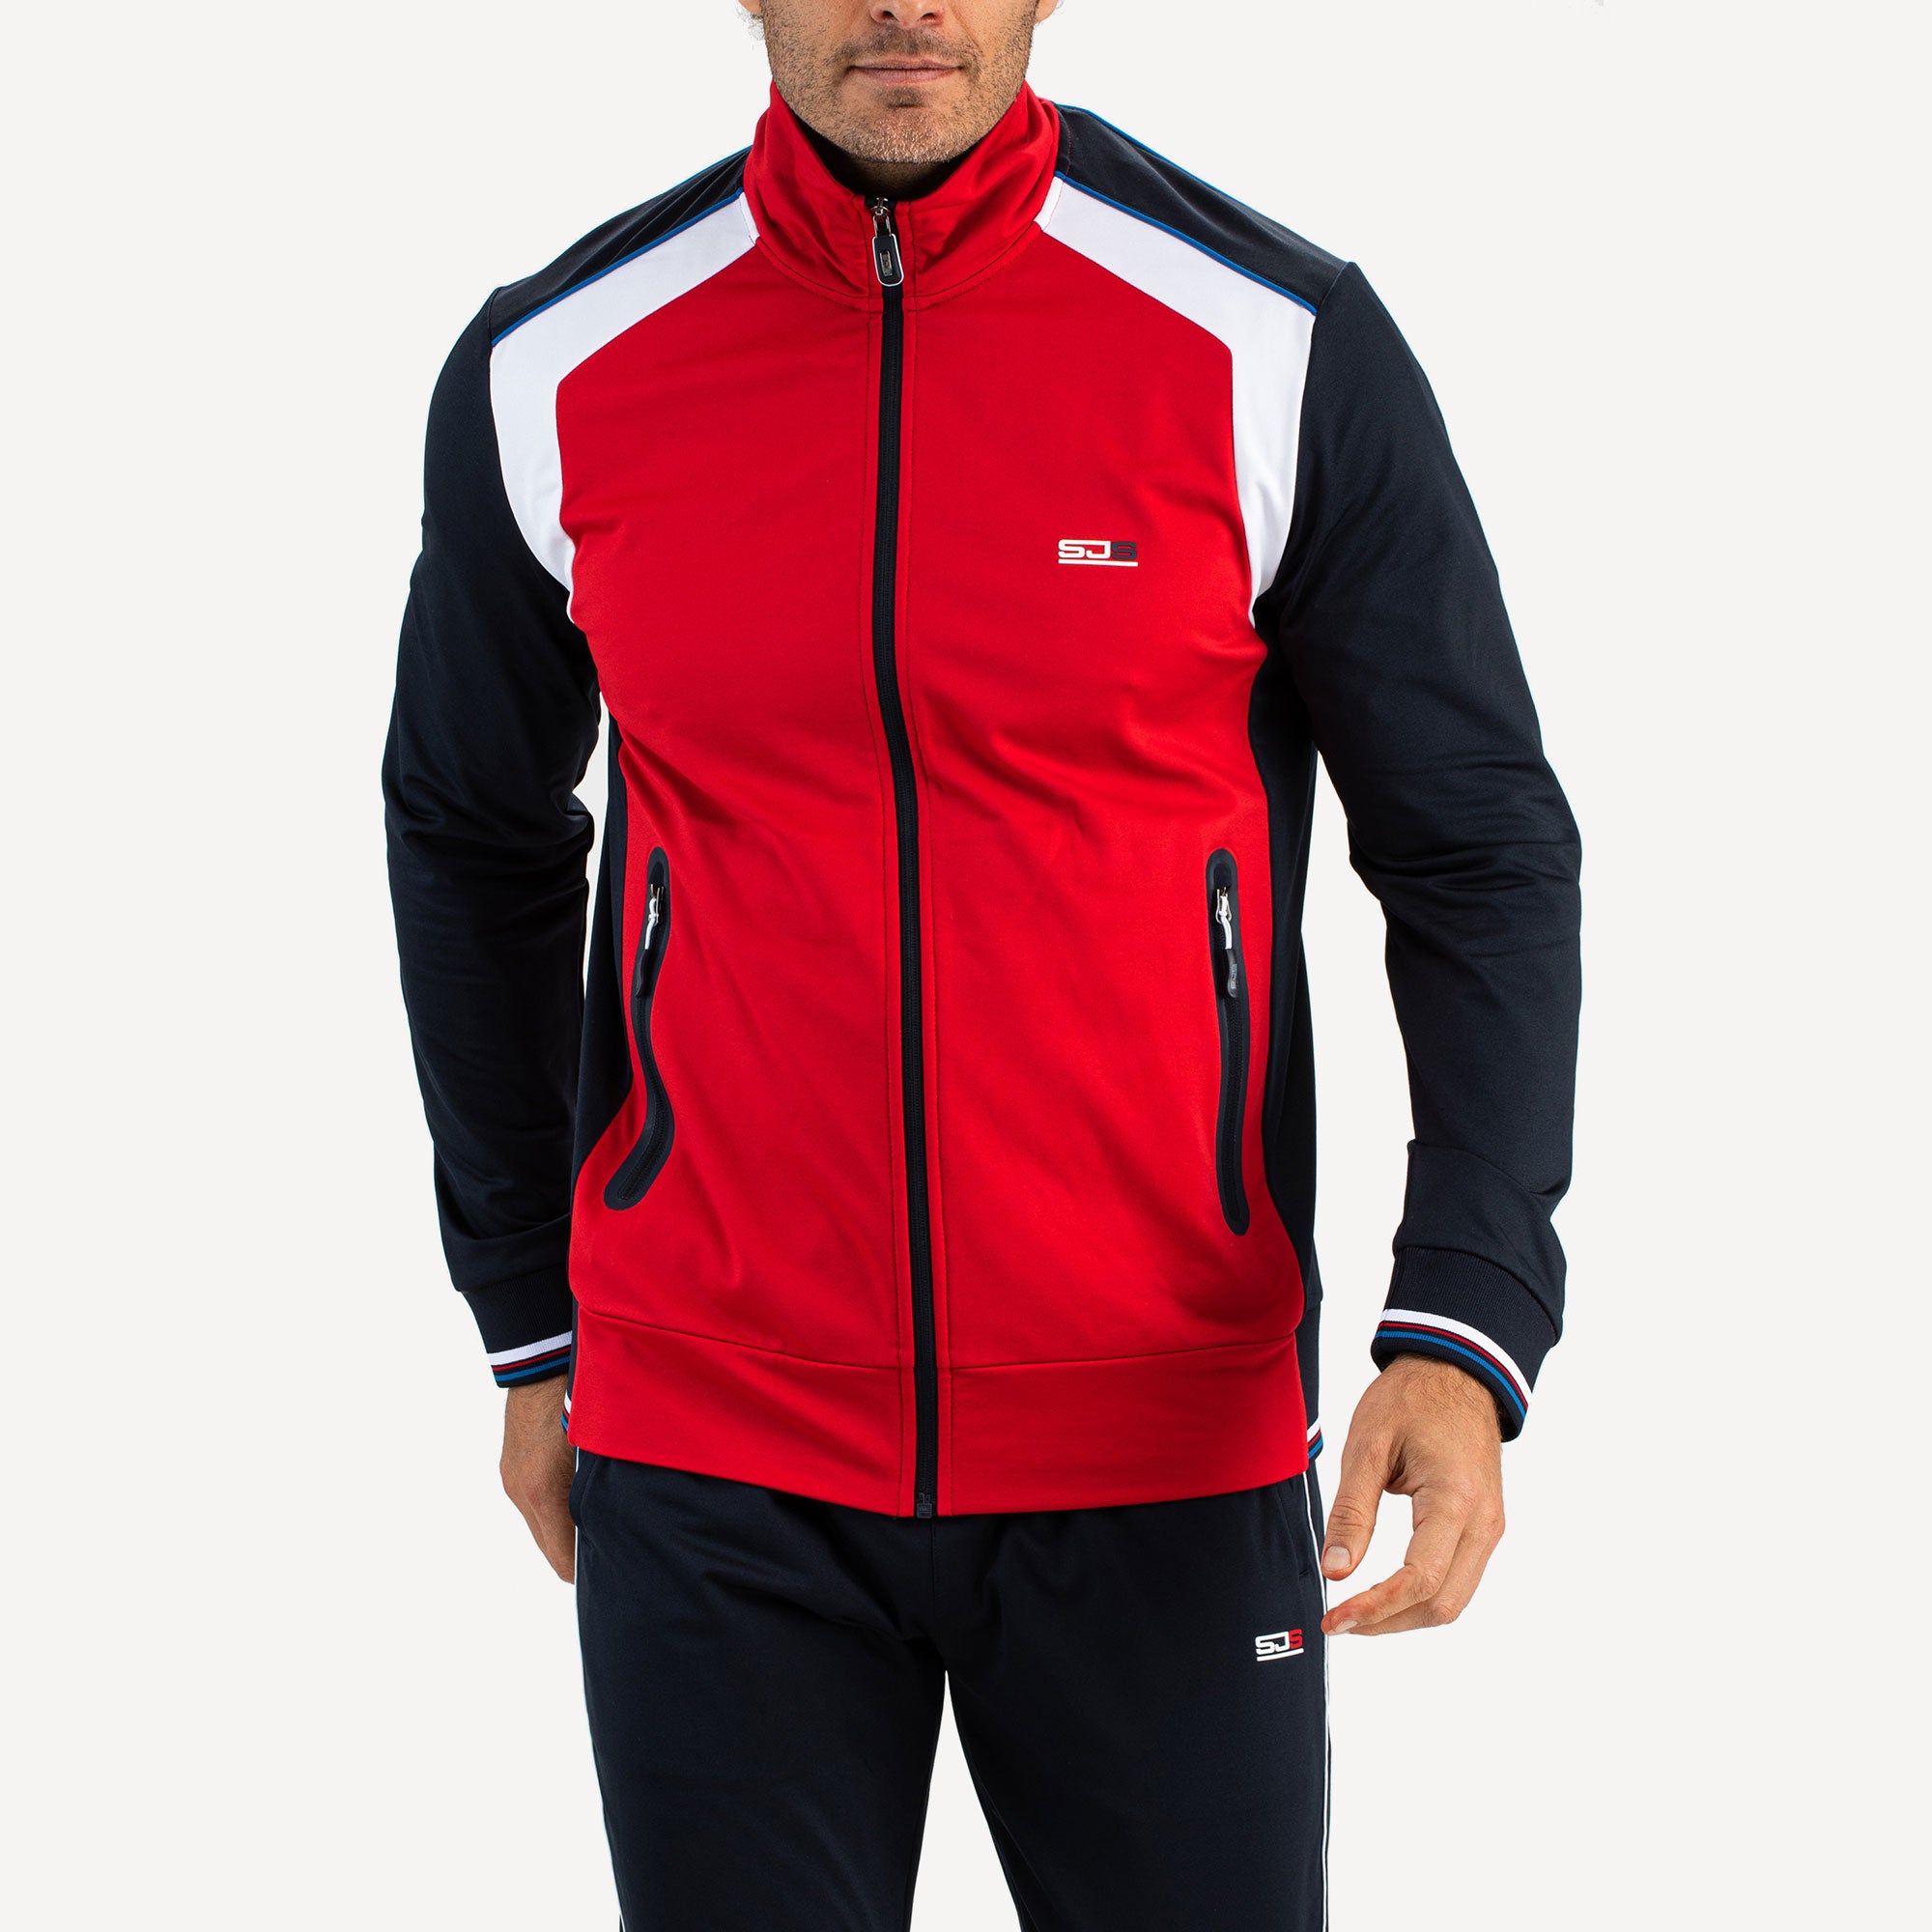 Sjeng Sports Iggy Men's Tennis Jacket Red (1)